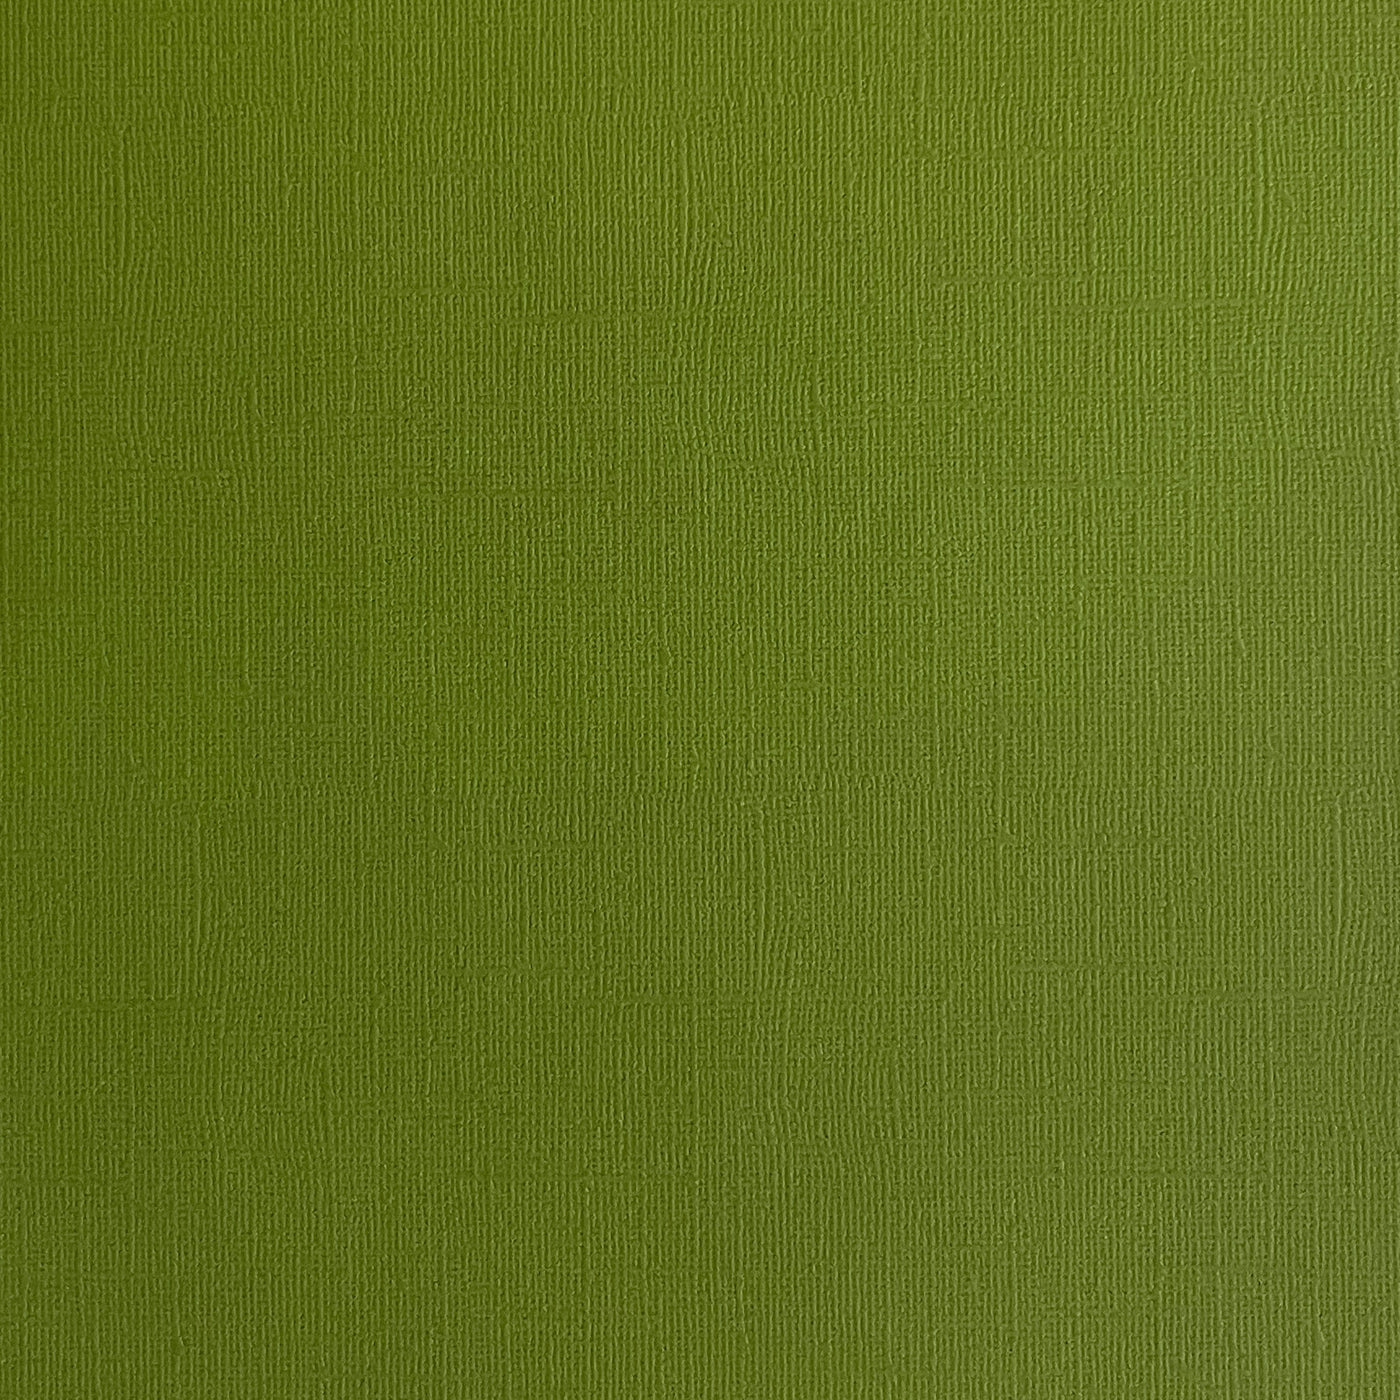 CACTUS - Olive Green Textured 12x12 Cardstock - Encore Paper